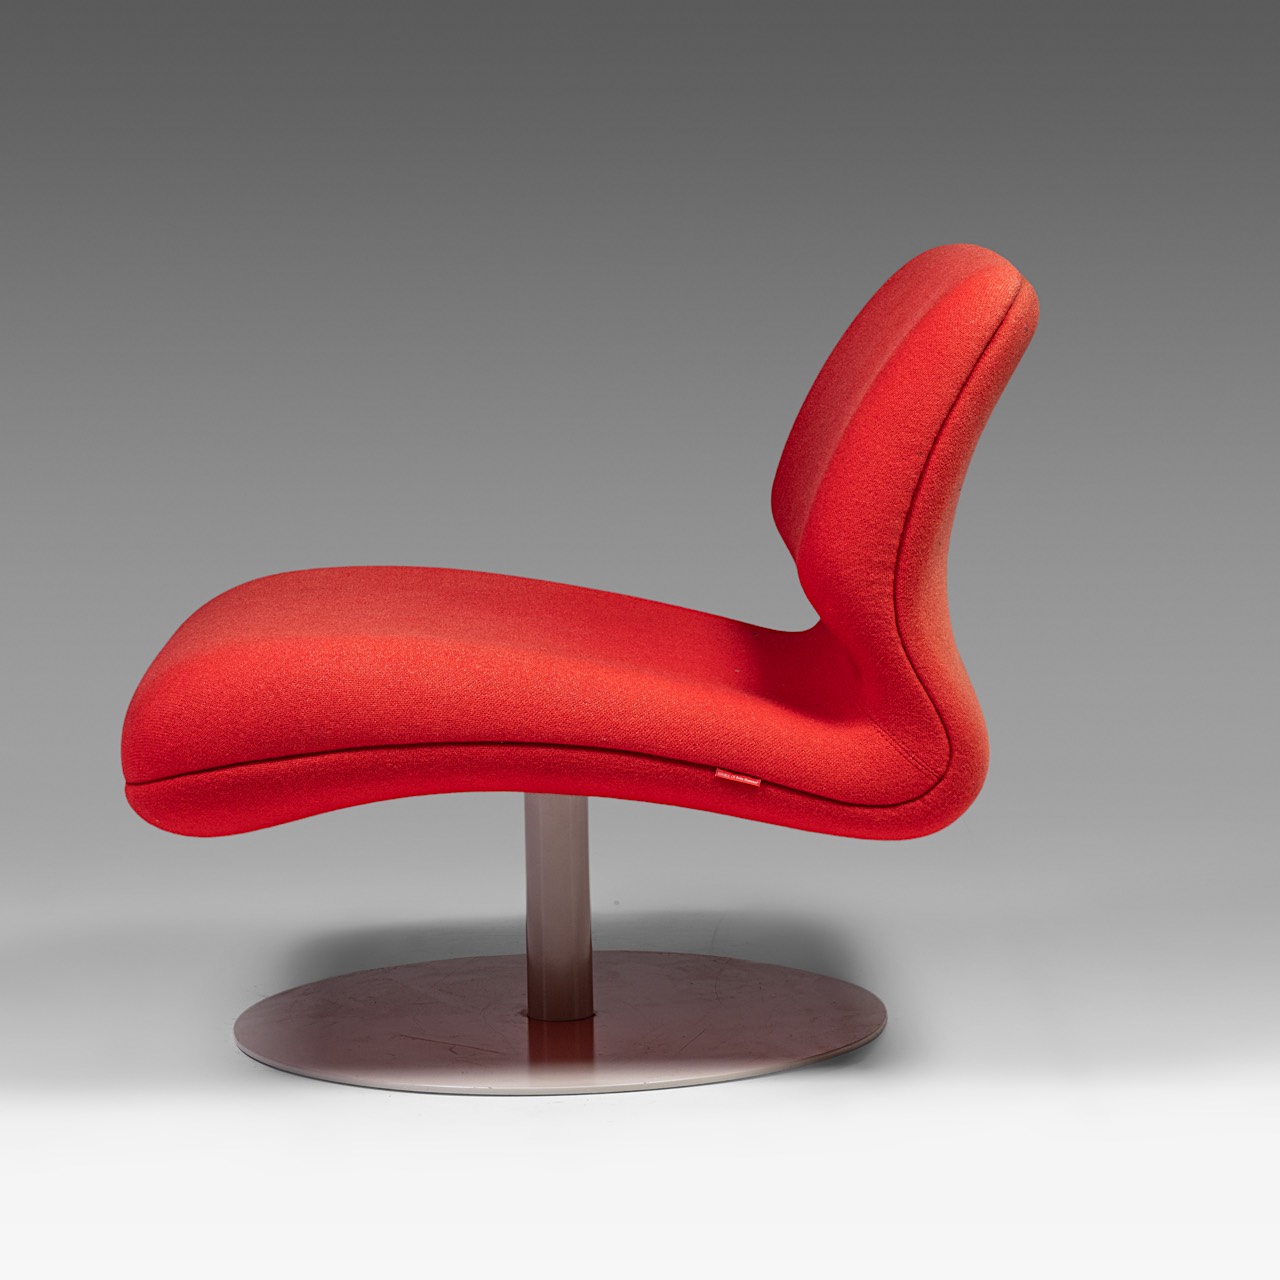 An 'Attitude' chair by Morten Voss for Fritz Hansen, Danmark, 2005, H 70 - W 65 cm - Image 3 of 10